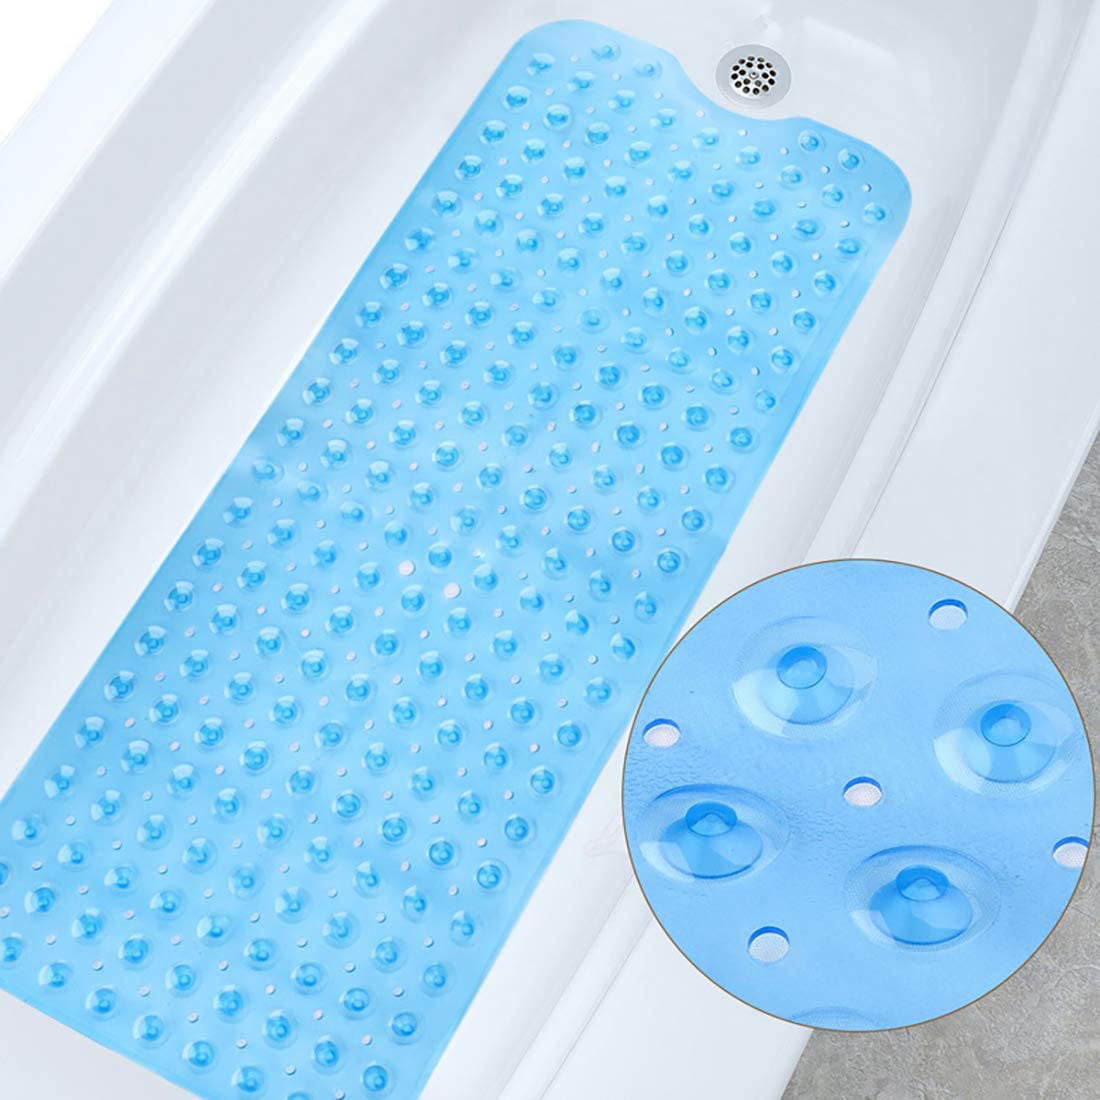 Sairis Non-Slip Bathmat Bathroom Shower Pad PVC Pebble Suction Cup Bathtub Mat